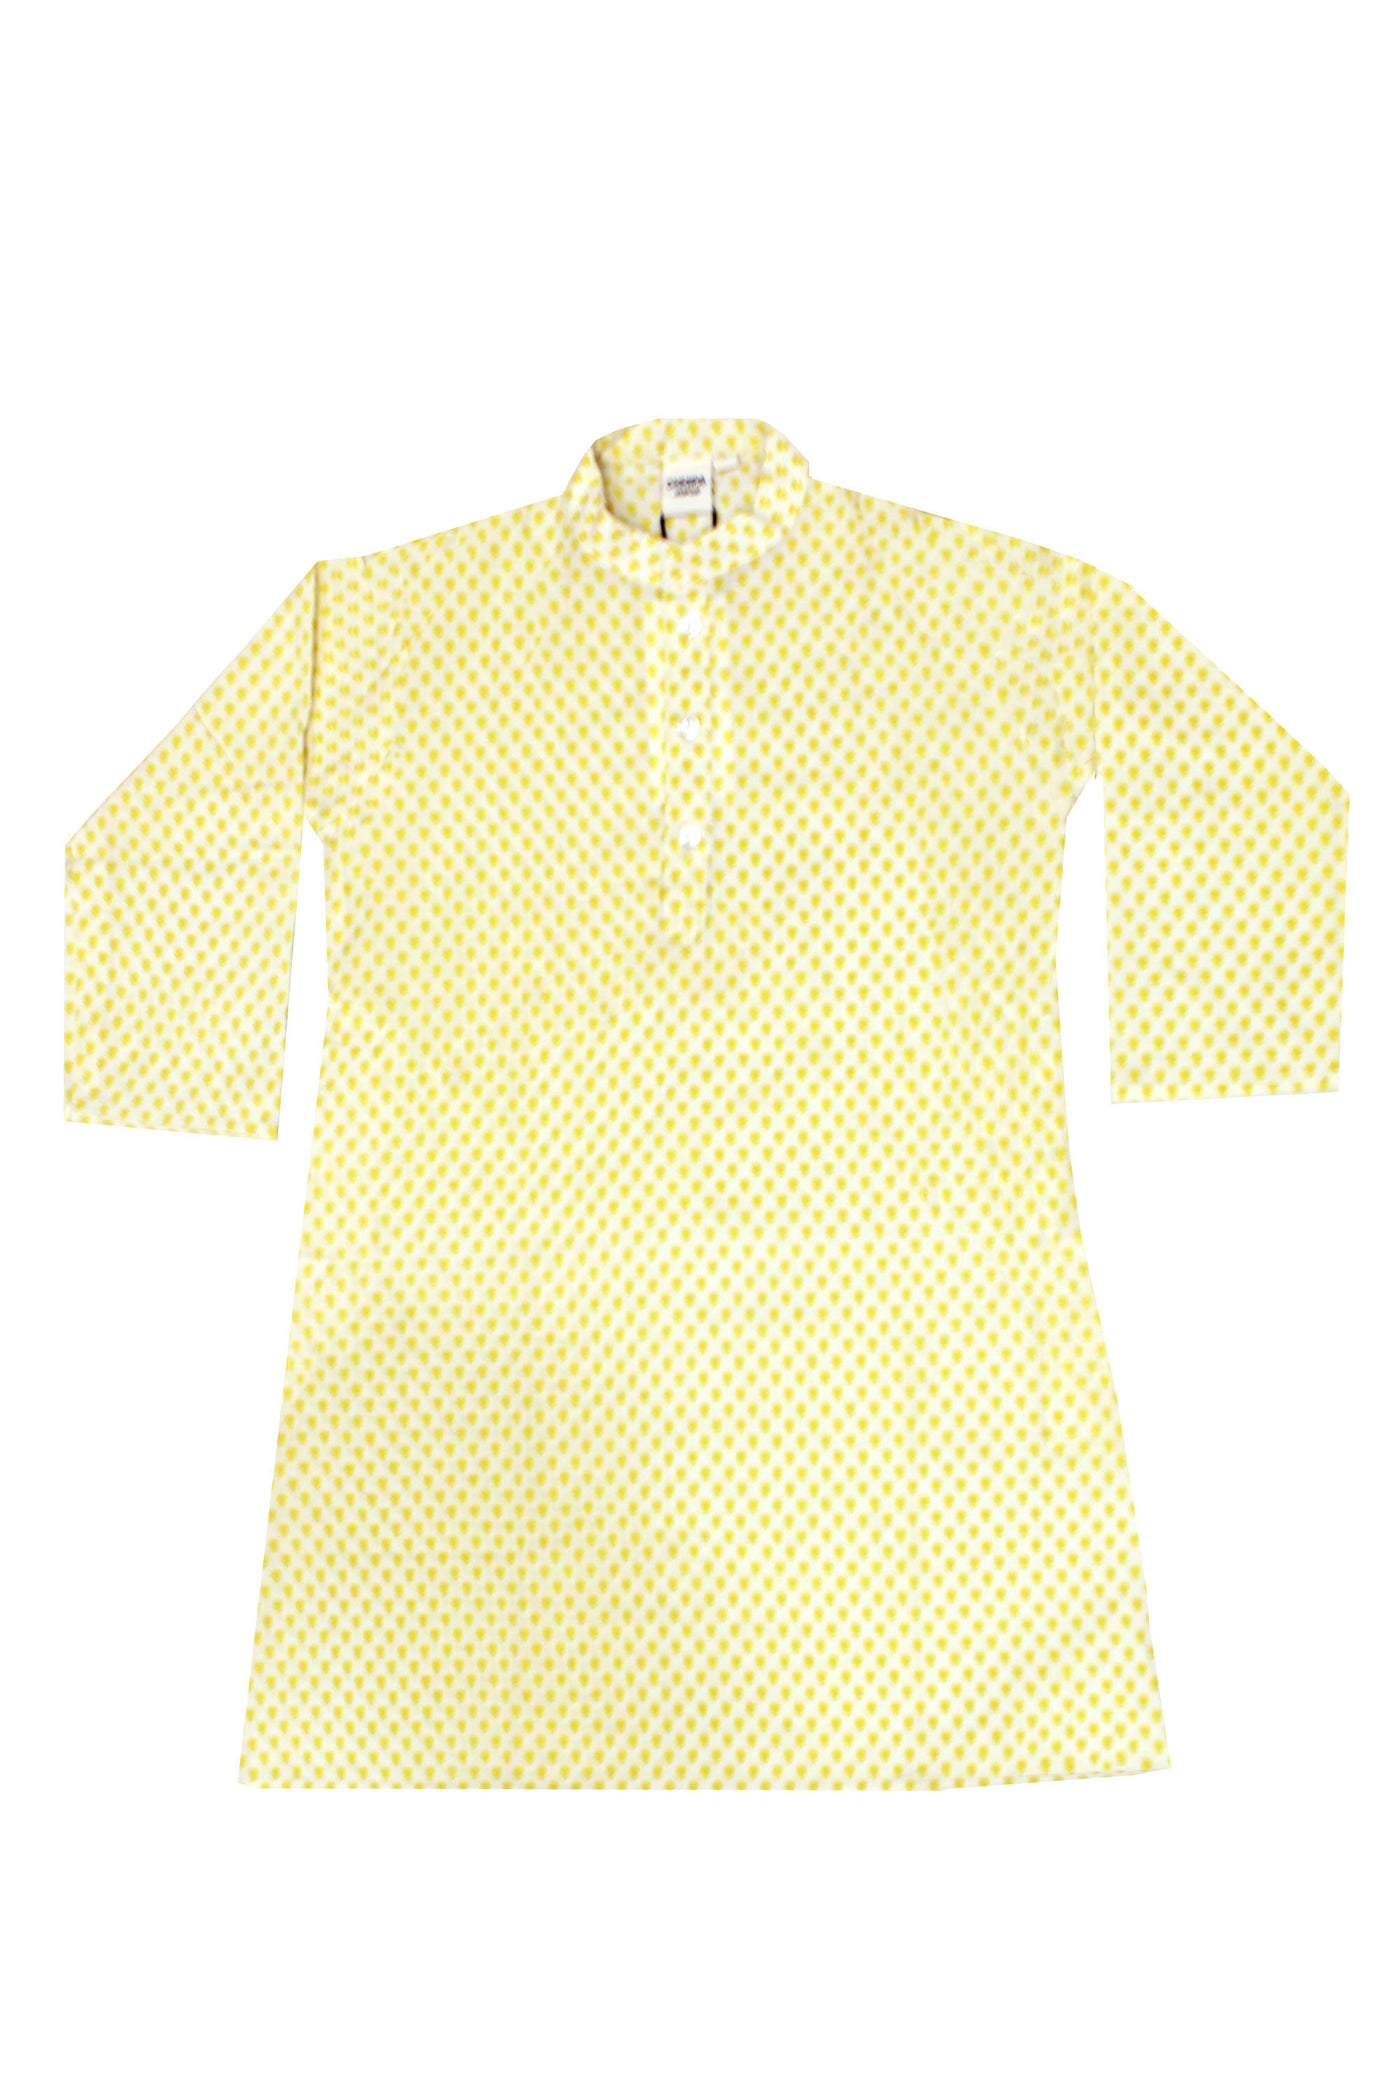 Cotton Buti Print Boys Kurta In Lemon Yellow